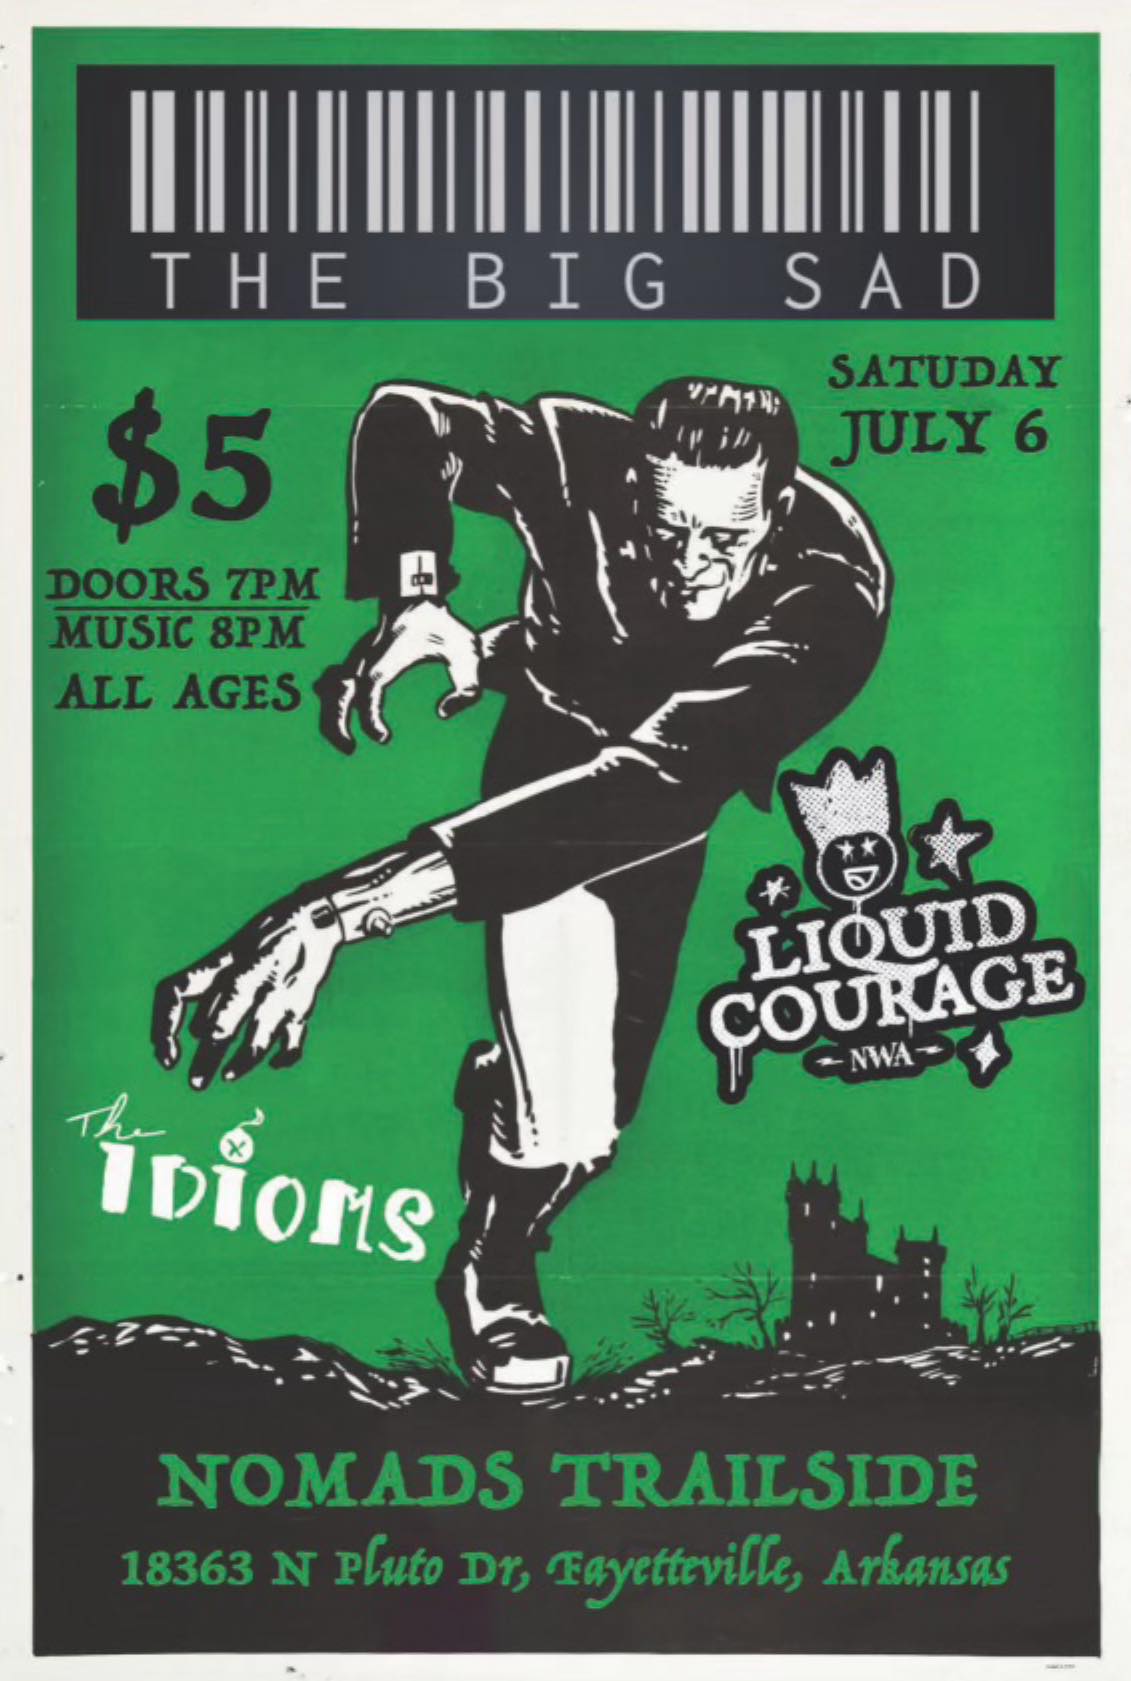 The Big Sad / Liquid Courage / The Idioms